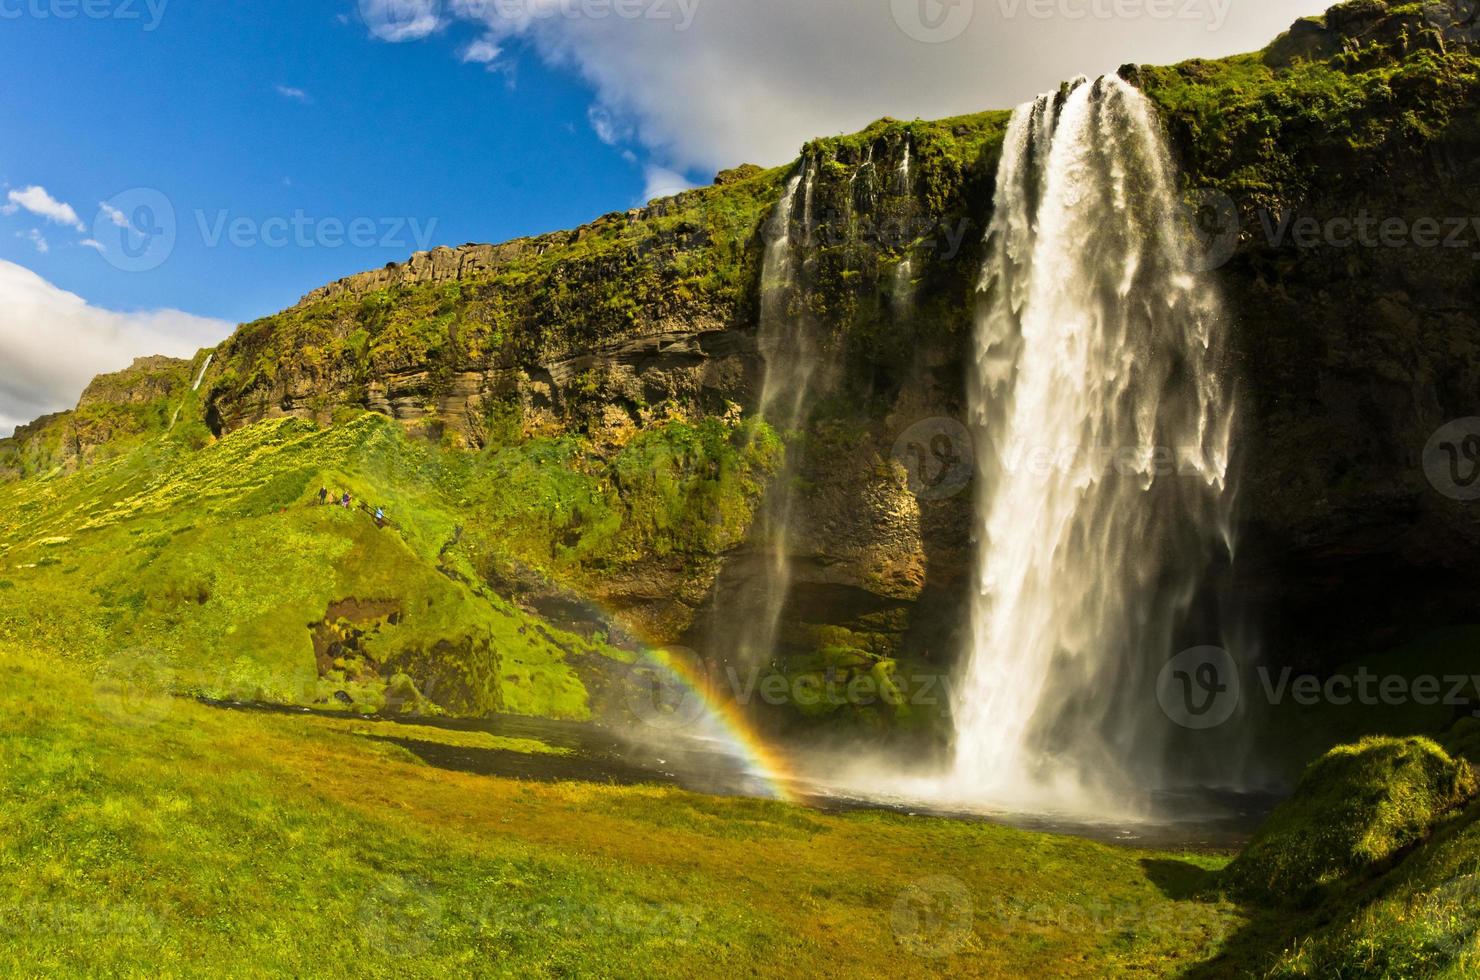 cachoeira seljalandsfoss do rio seljalandsa, sul da islândia foto